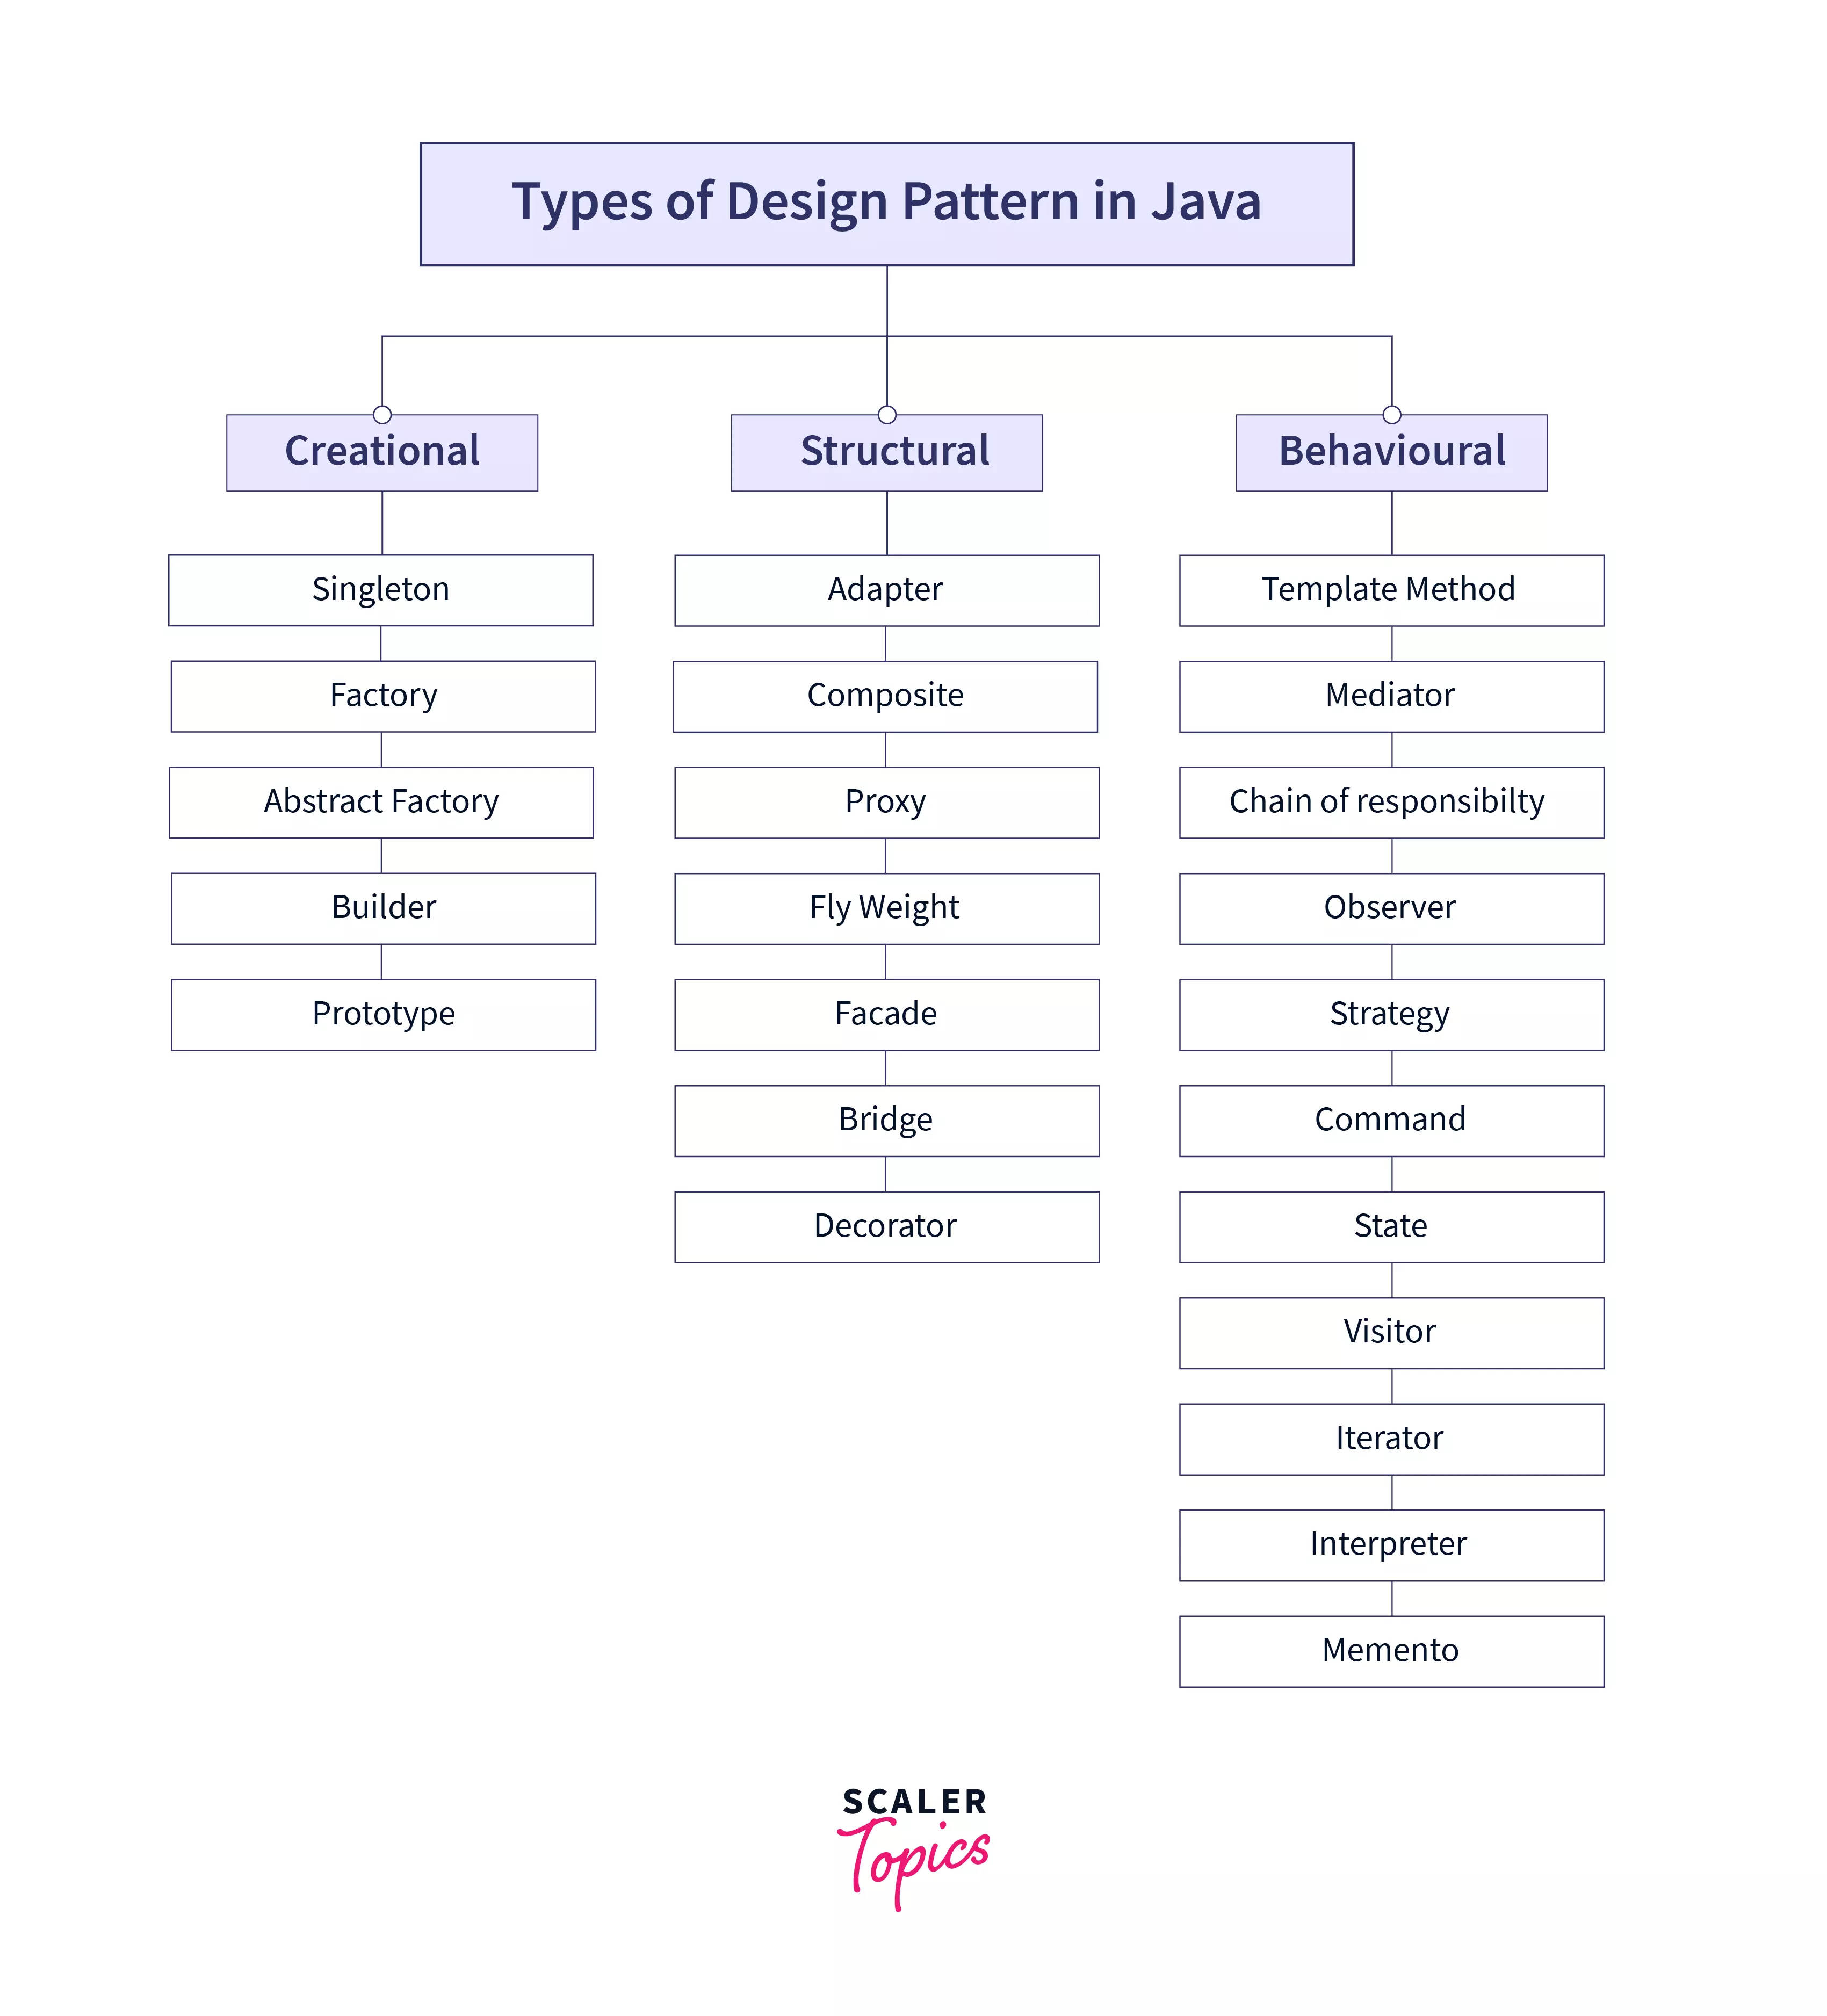 Types of Design Patterns